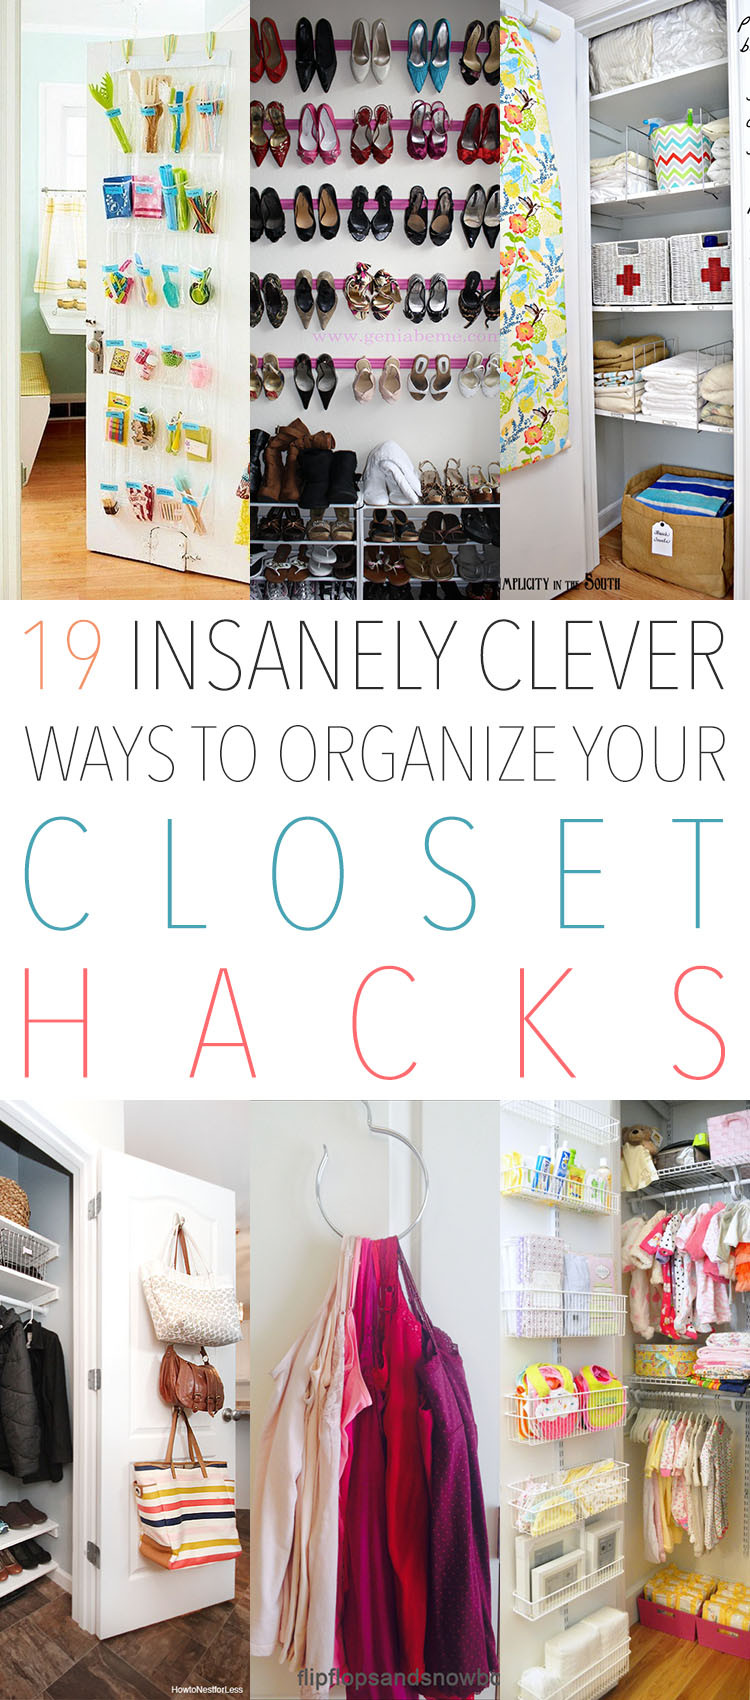 DIY Ways To Organize Your Closet
 19 Insanely Clever Ways to Organize Your Closet Hacks